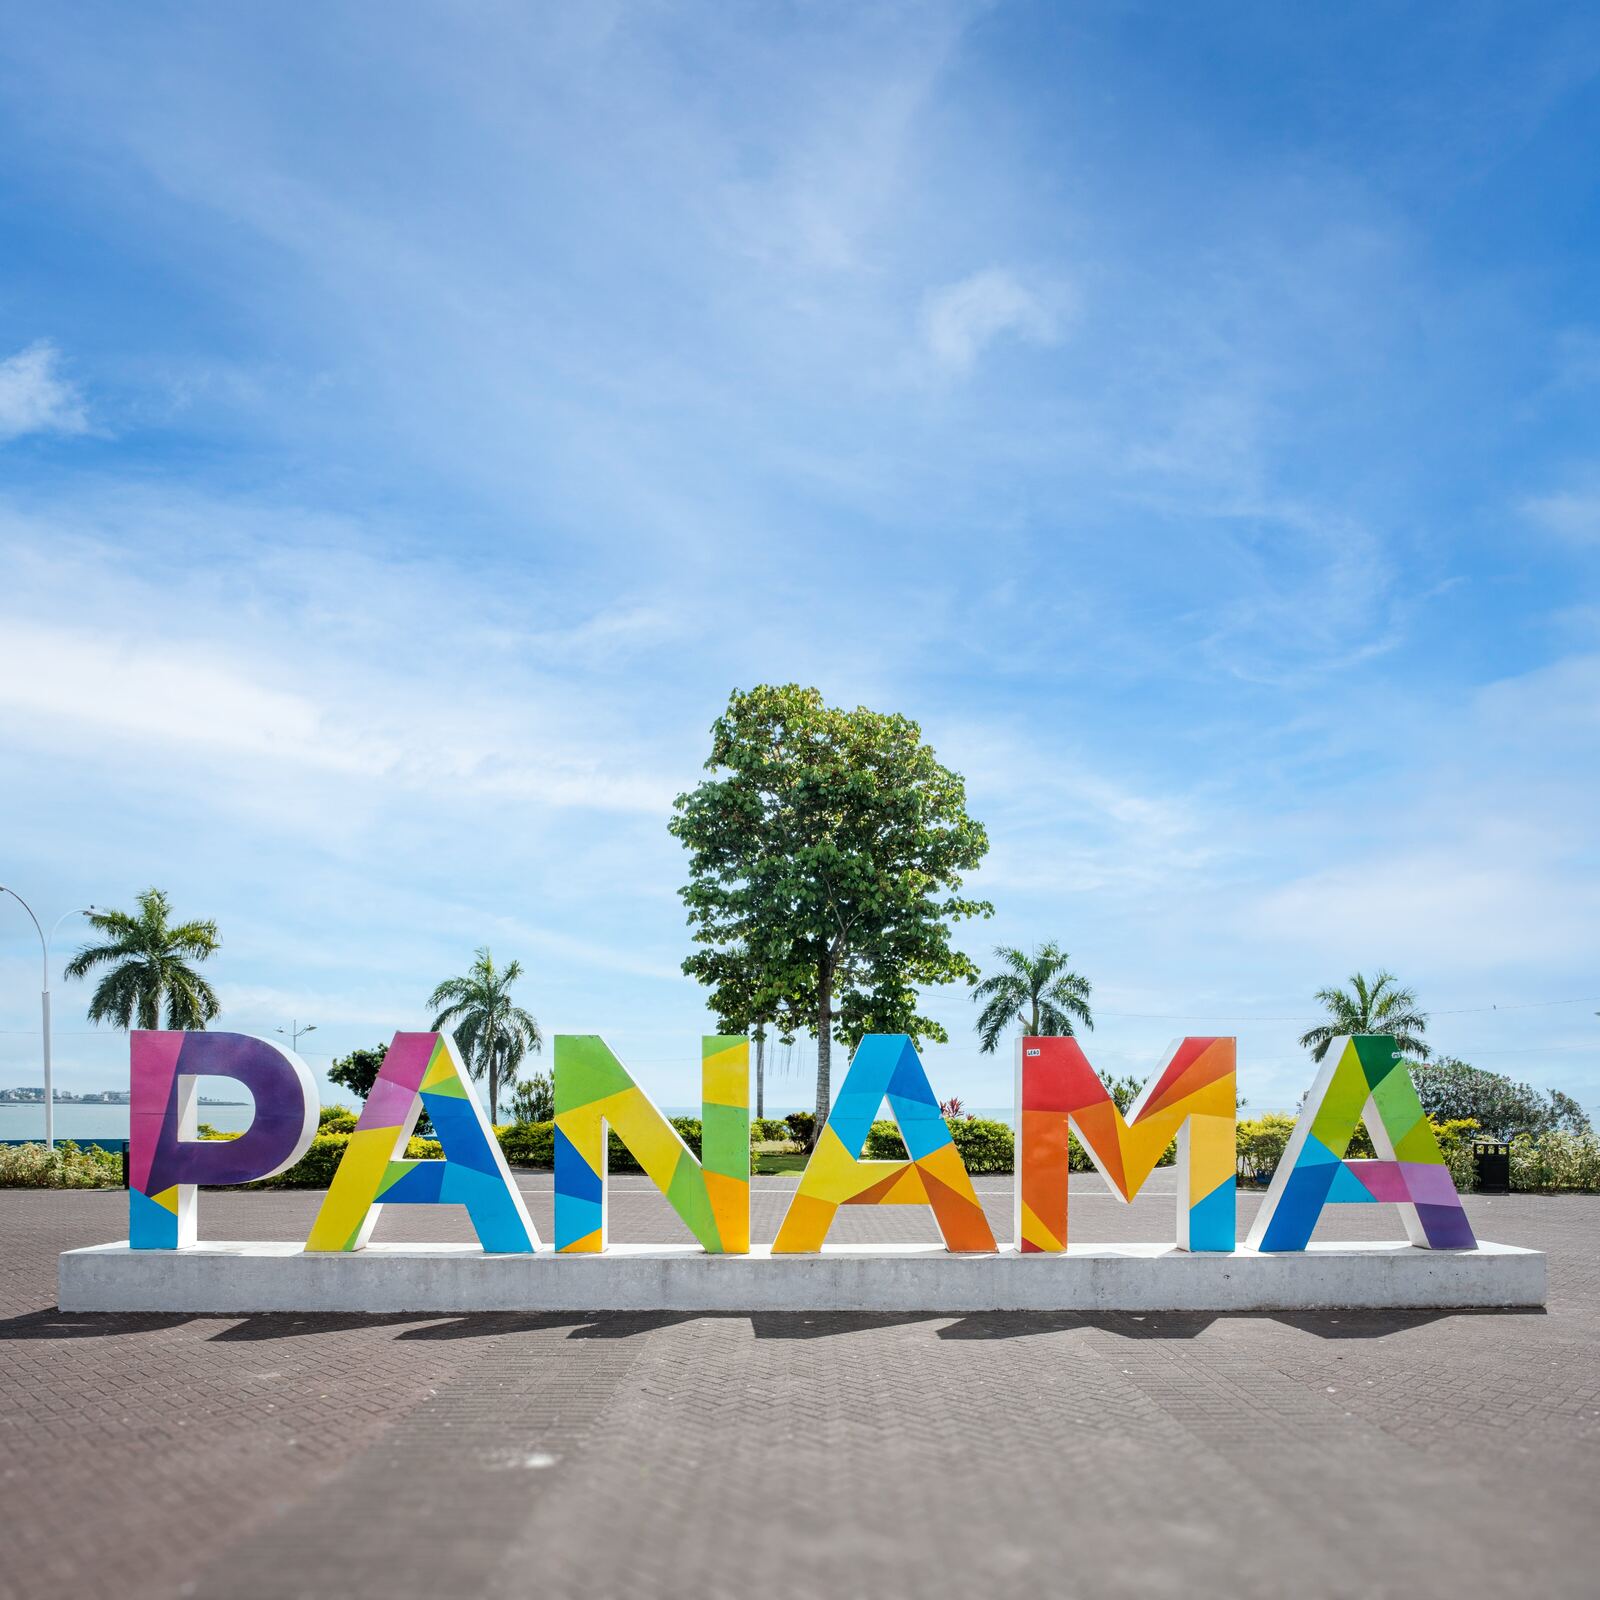 Panama photo locations